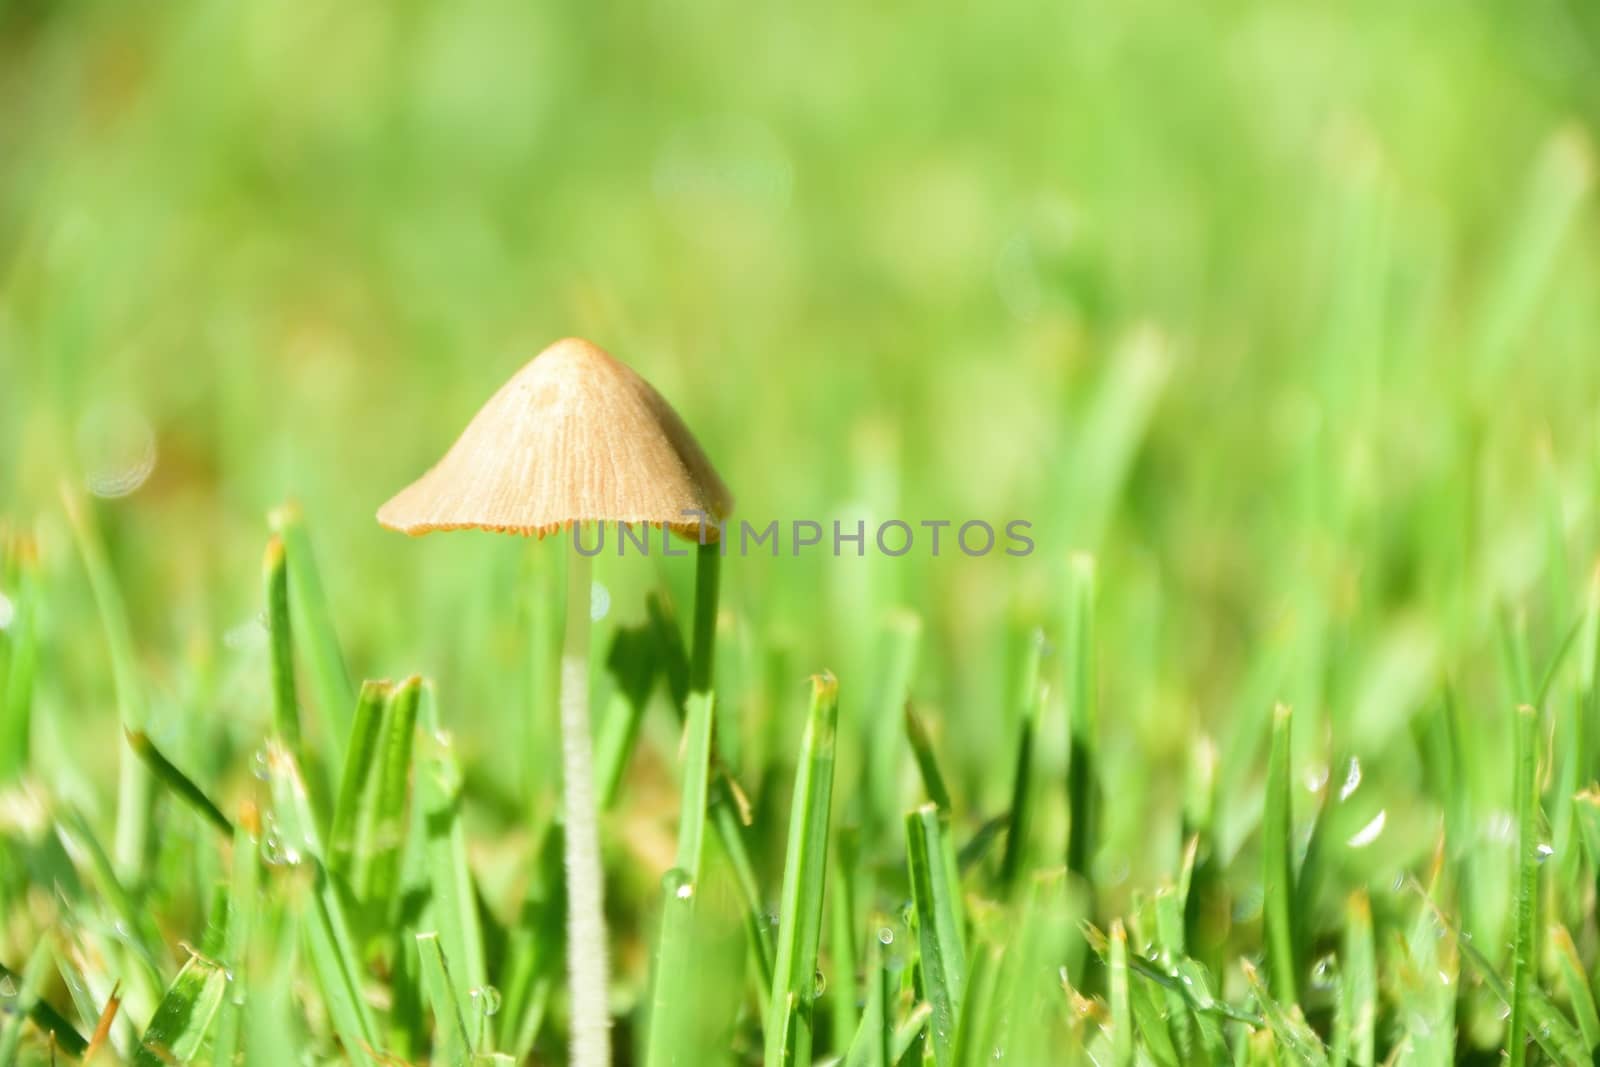 A small wild mushroom growing through grass.